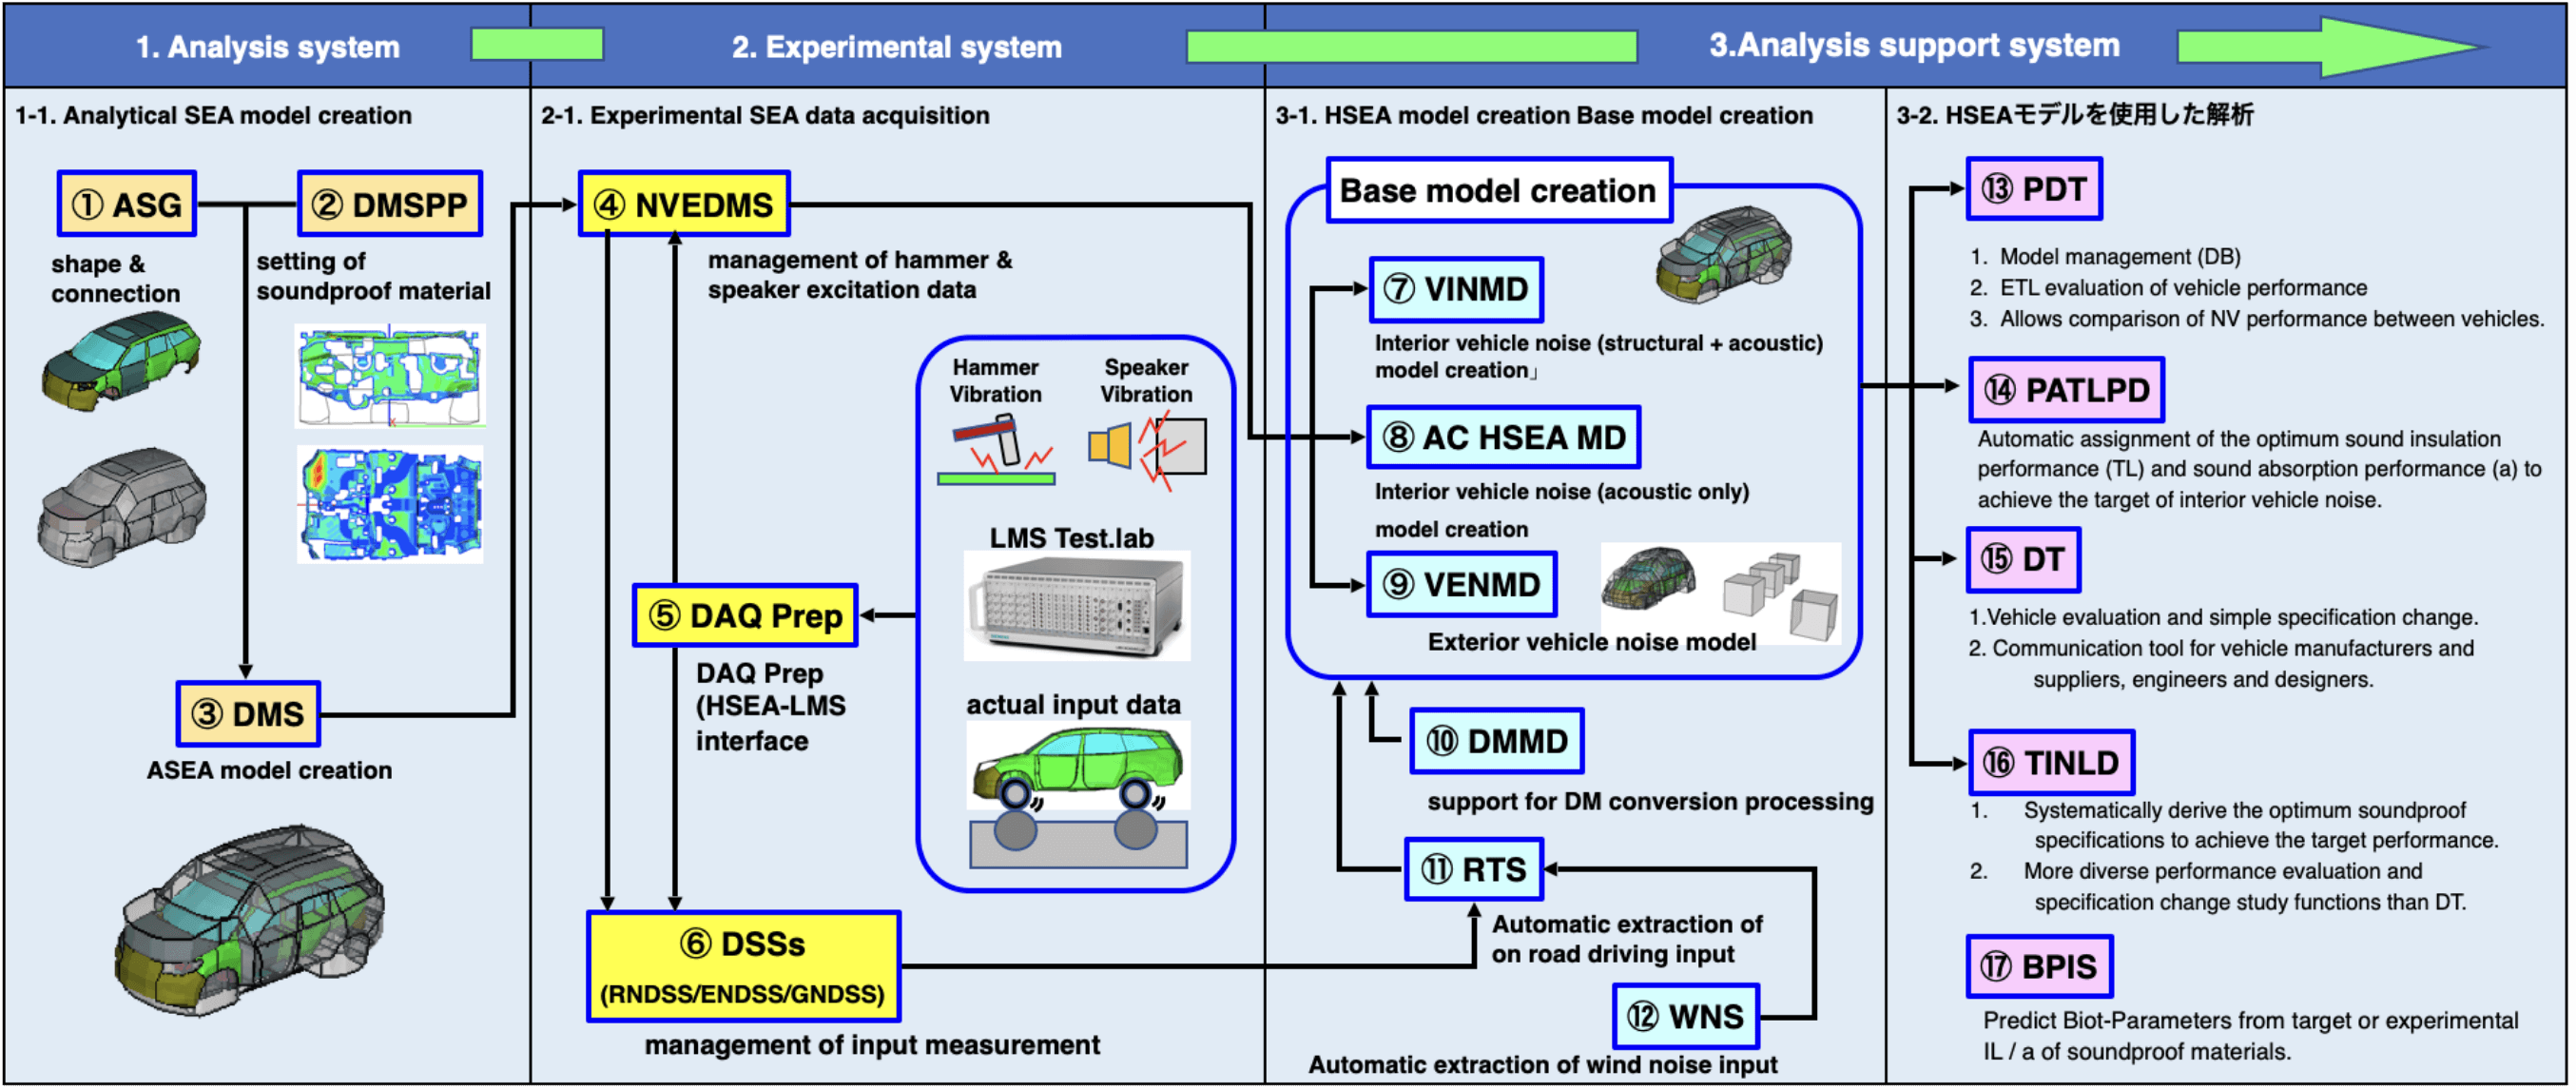 Vehicle development flow using HSEA model and HSEA software configuration